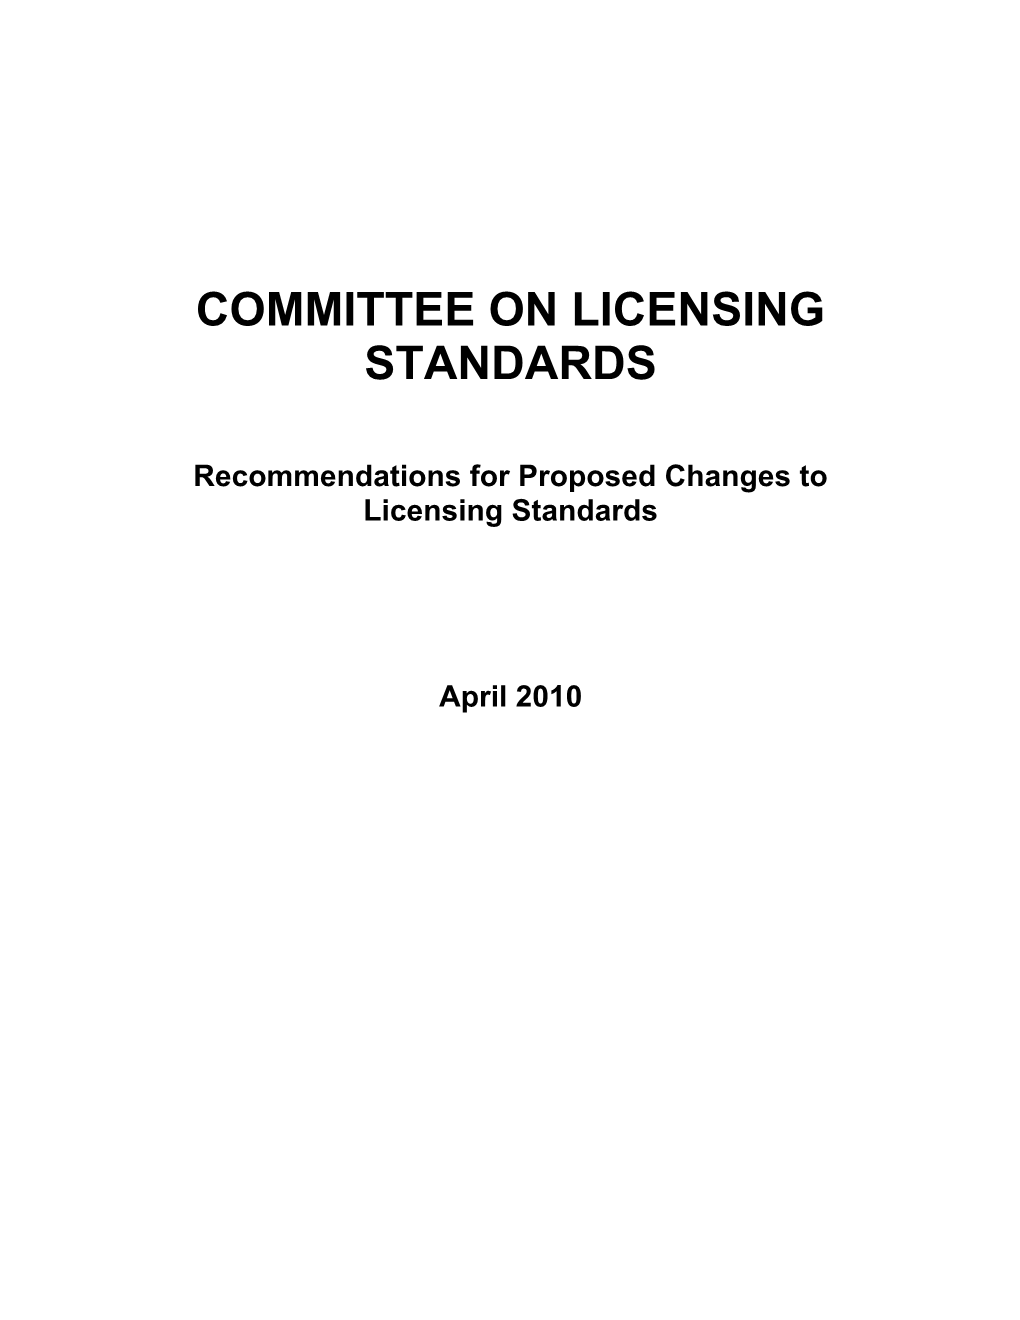 Committee on Licensing Standards